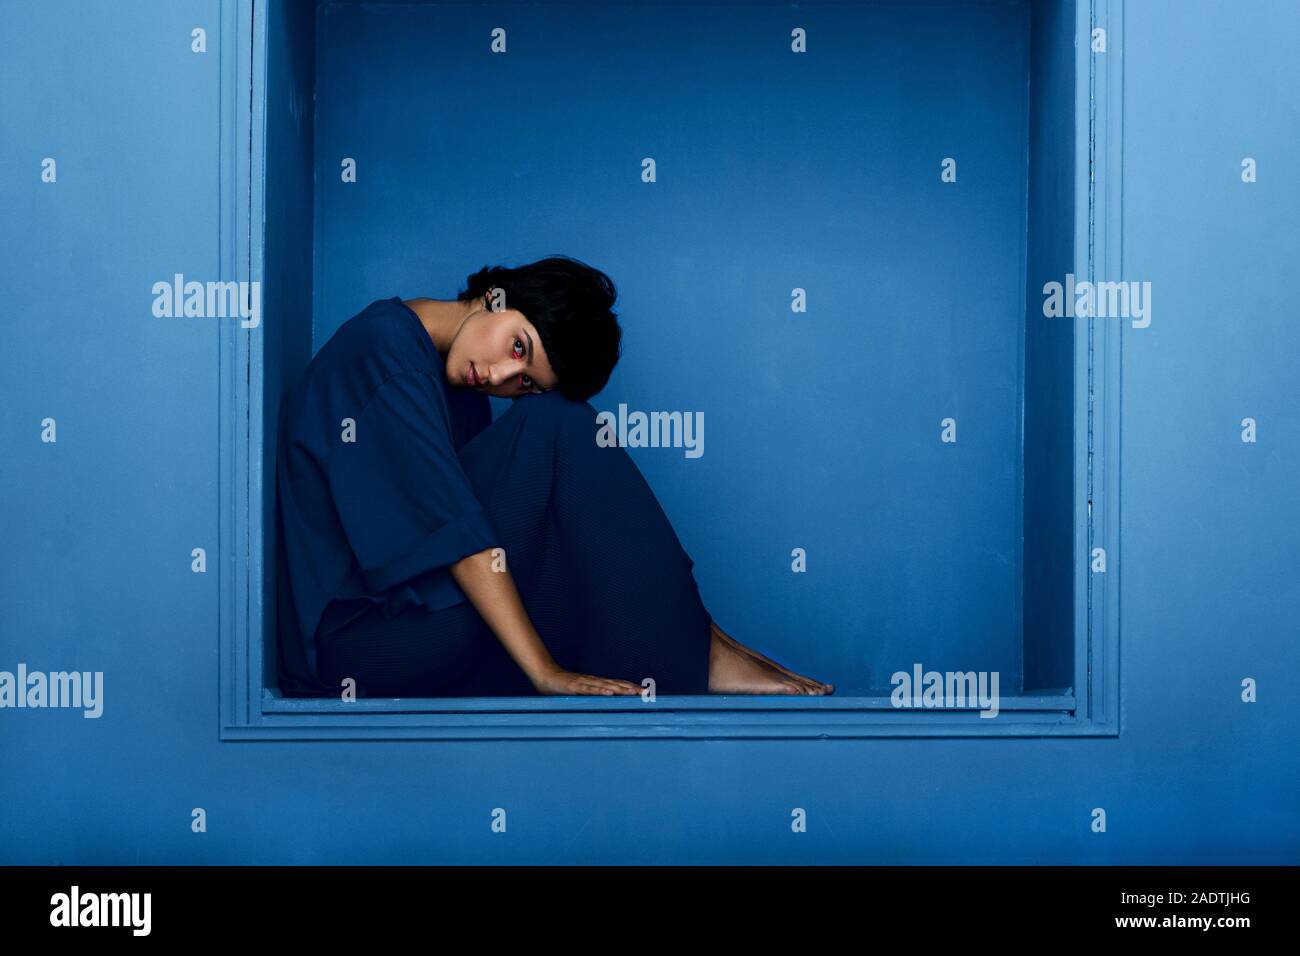 Fashion shot of young beautiful woman sitting in niche on blue background. Studio shot. Stock Photo